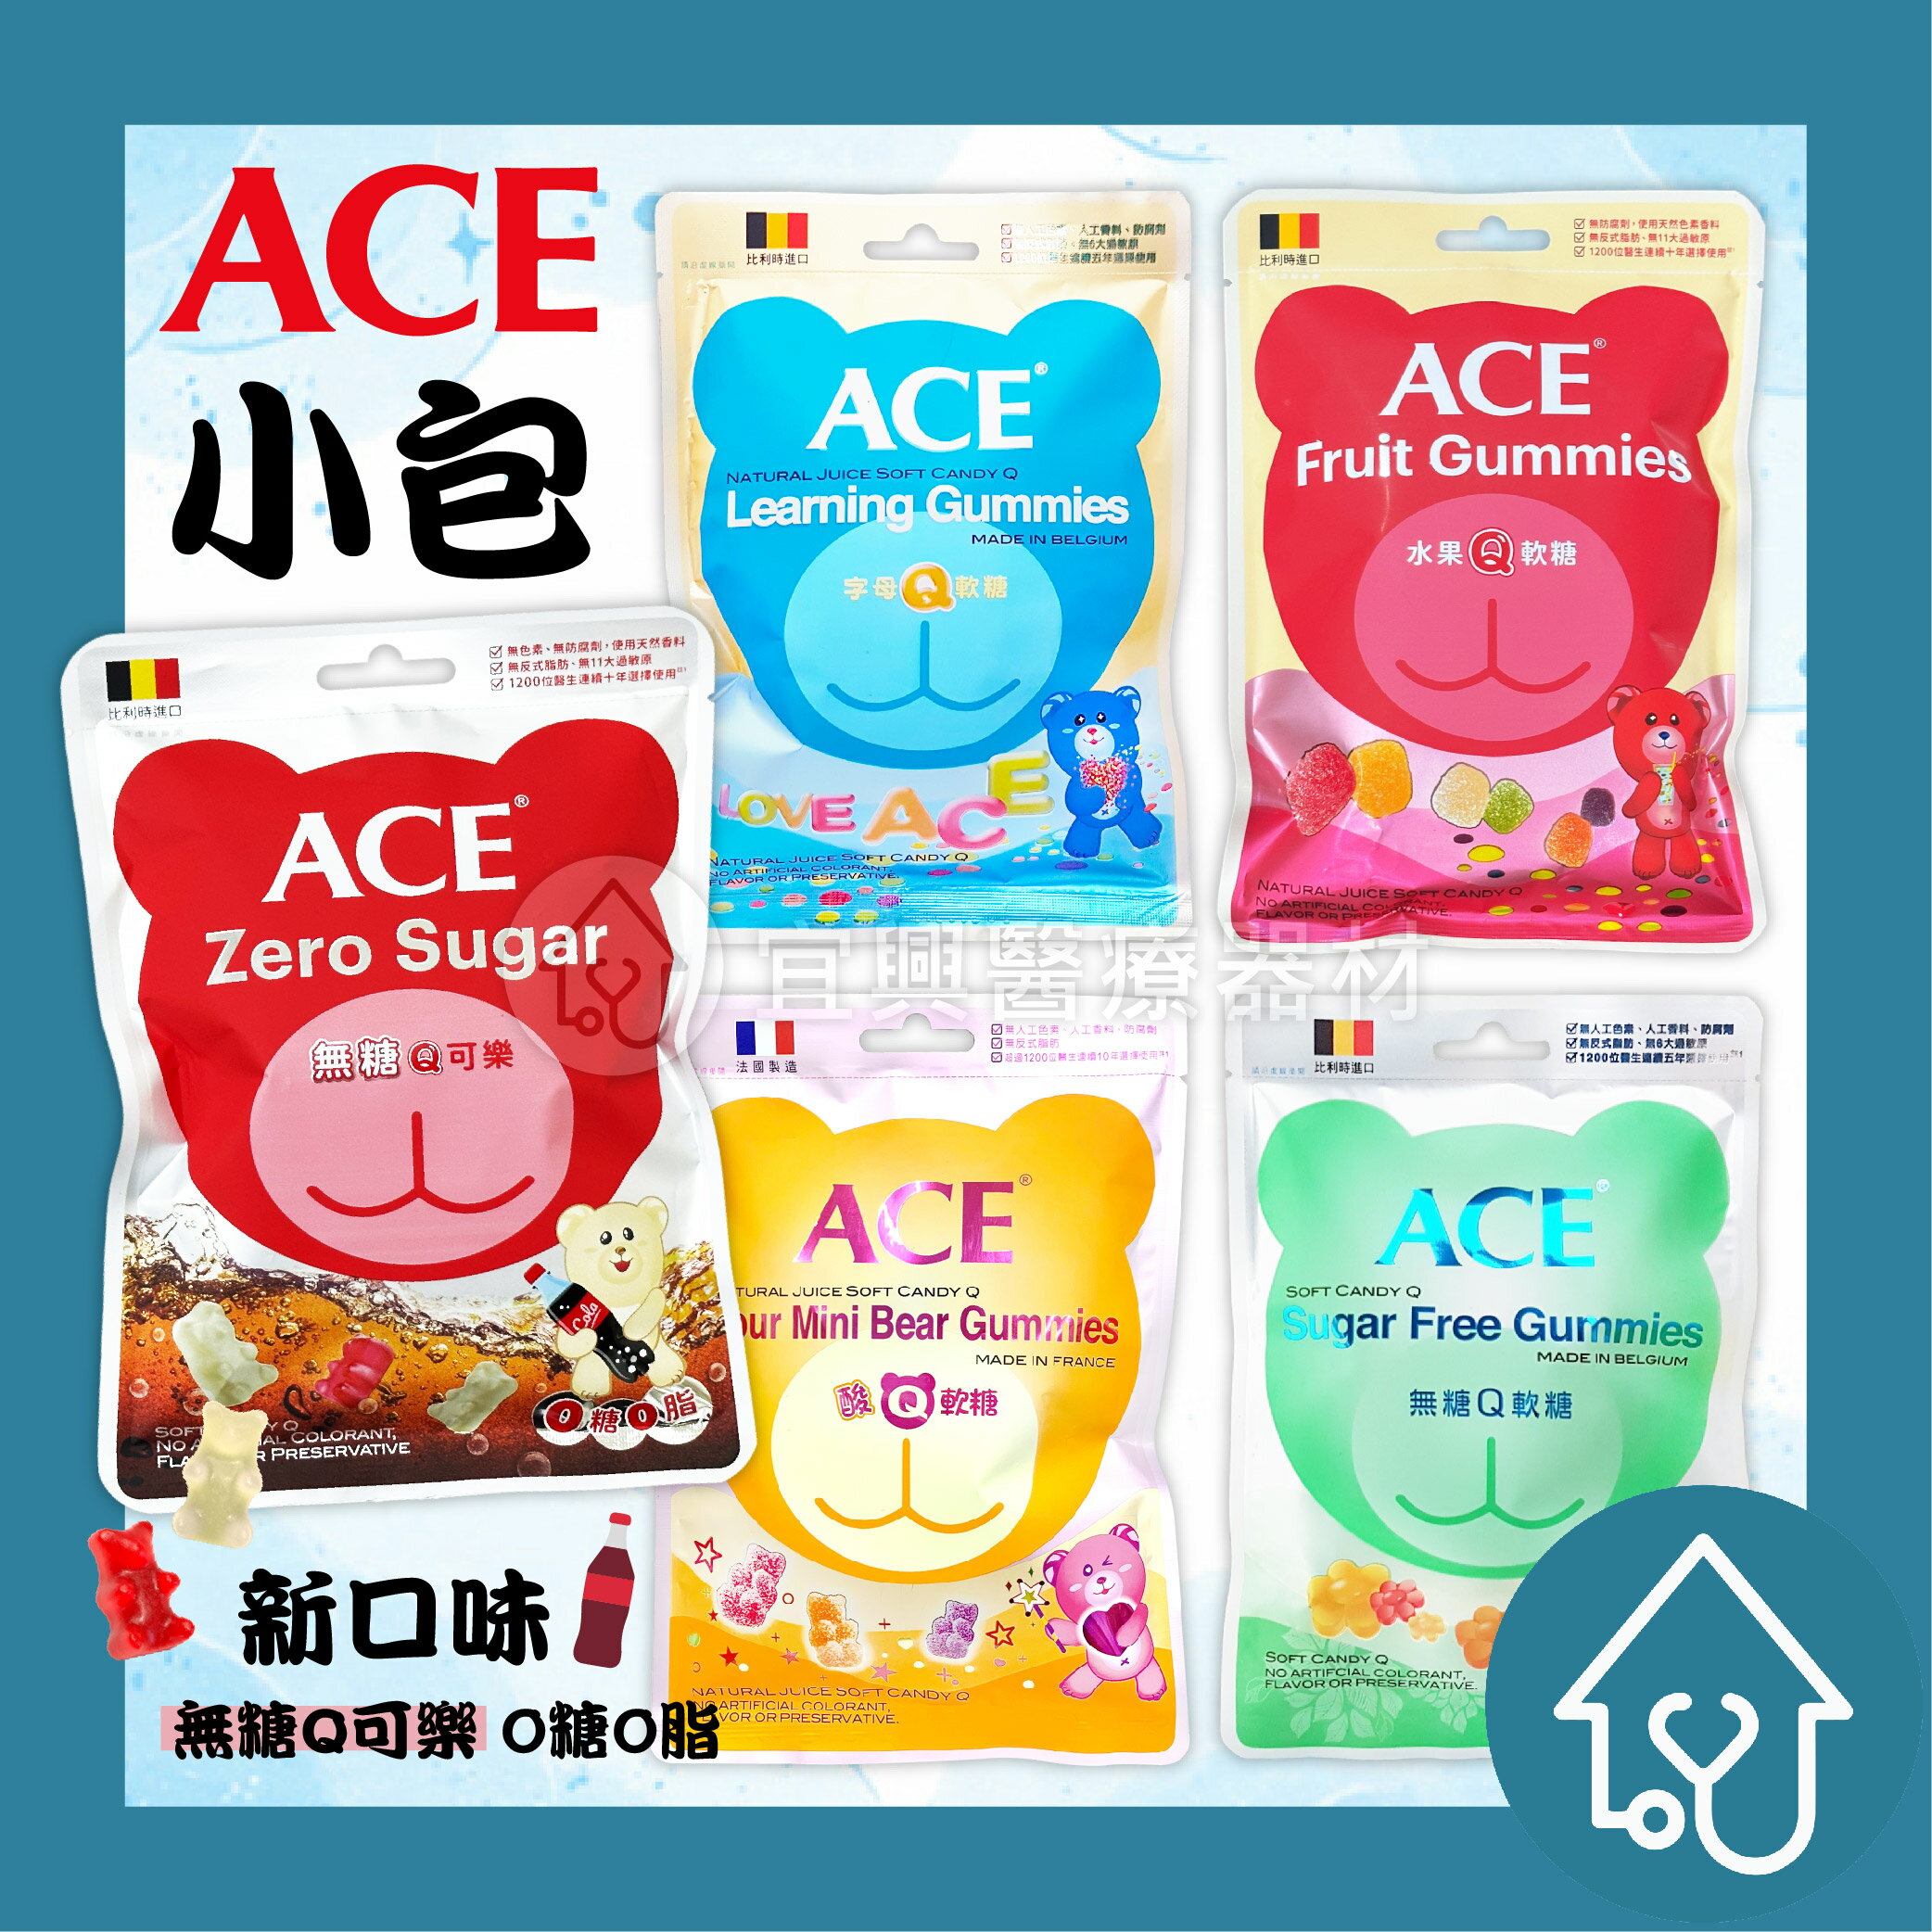 ACE 字母Q軟糖 48g / 無糖Q軟糖 48g / 水果Q軟糖 48g / 酸Q熊軟糖44G/袋